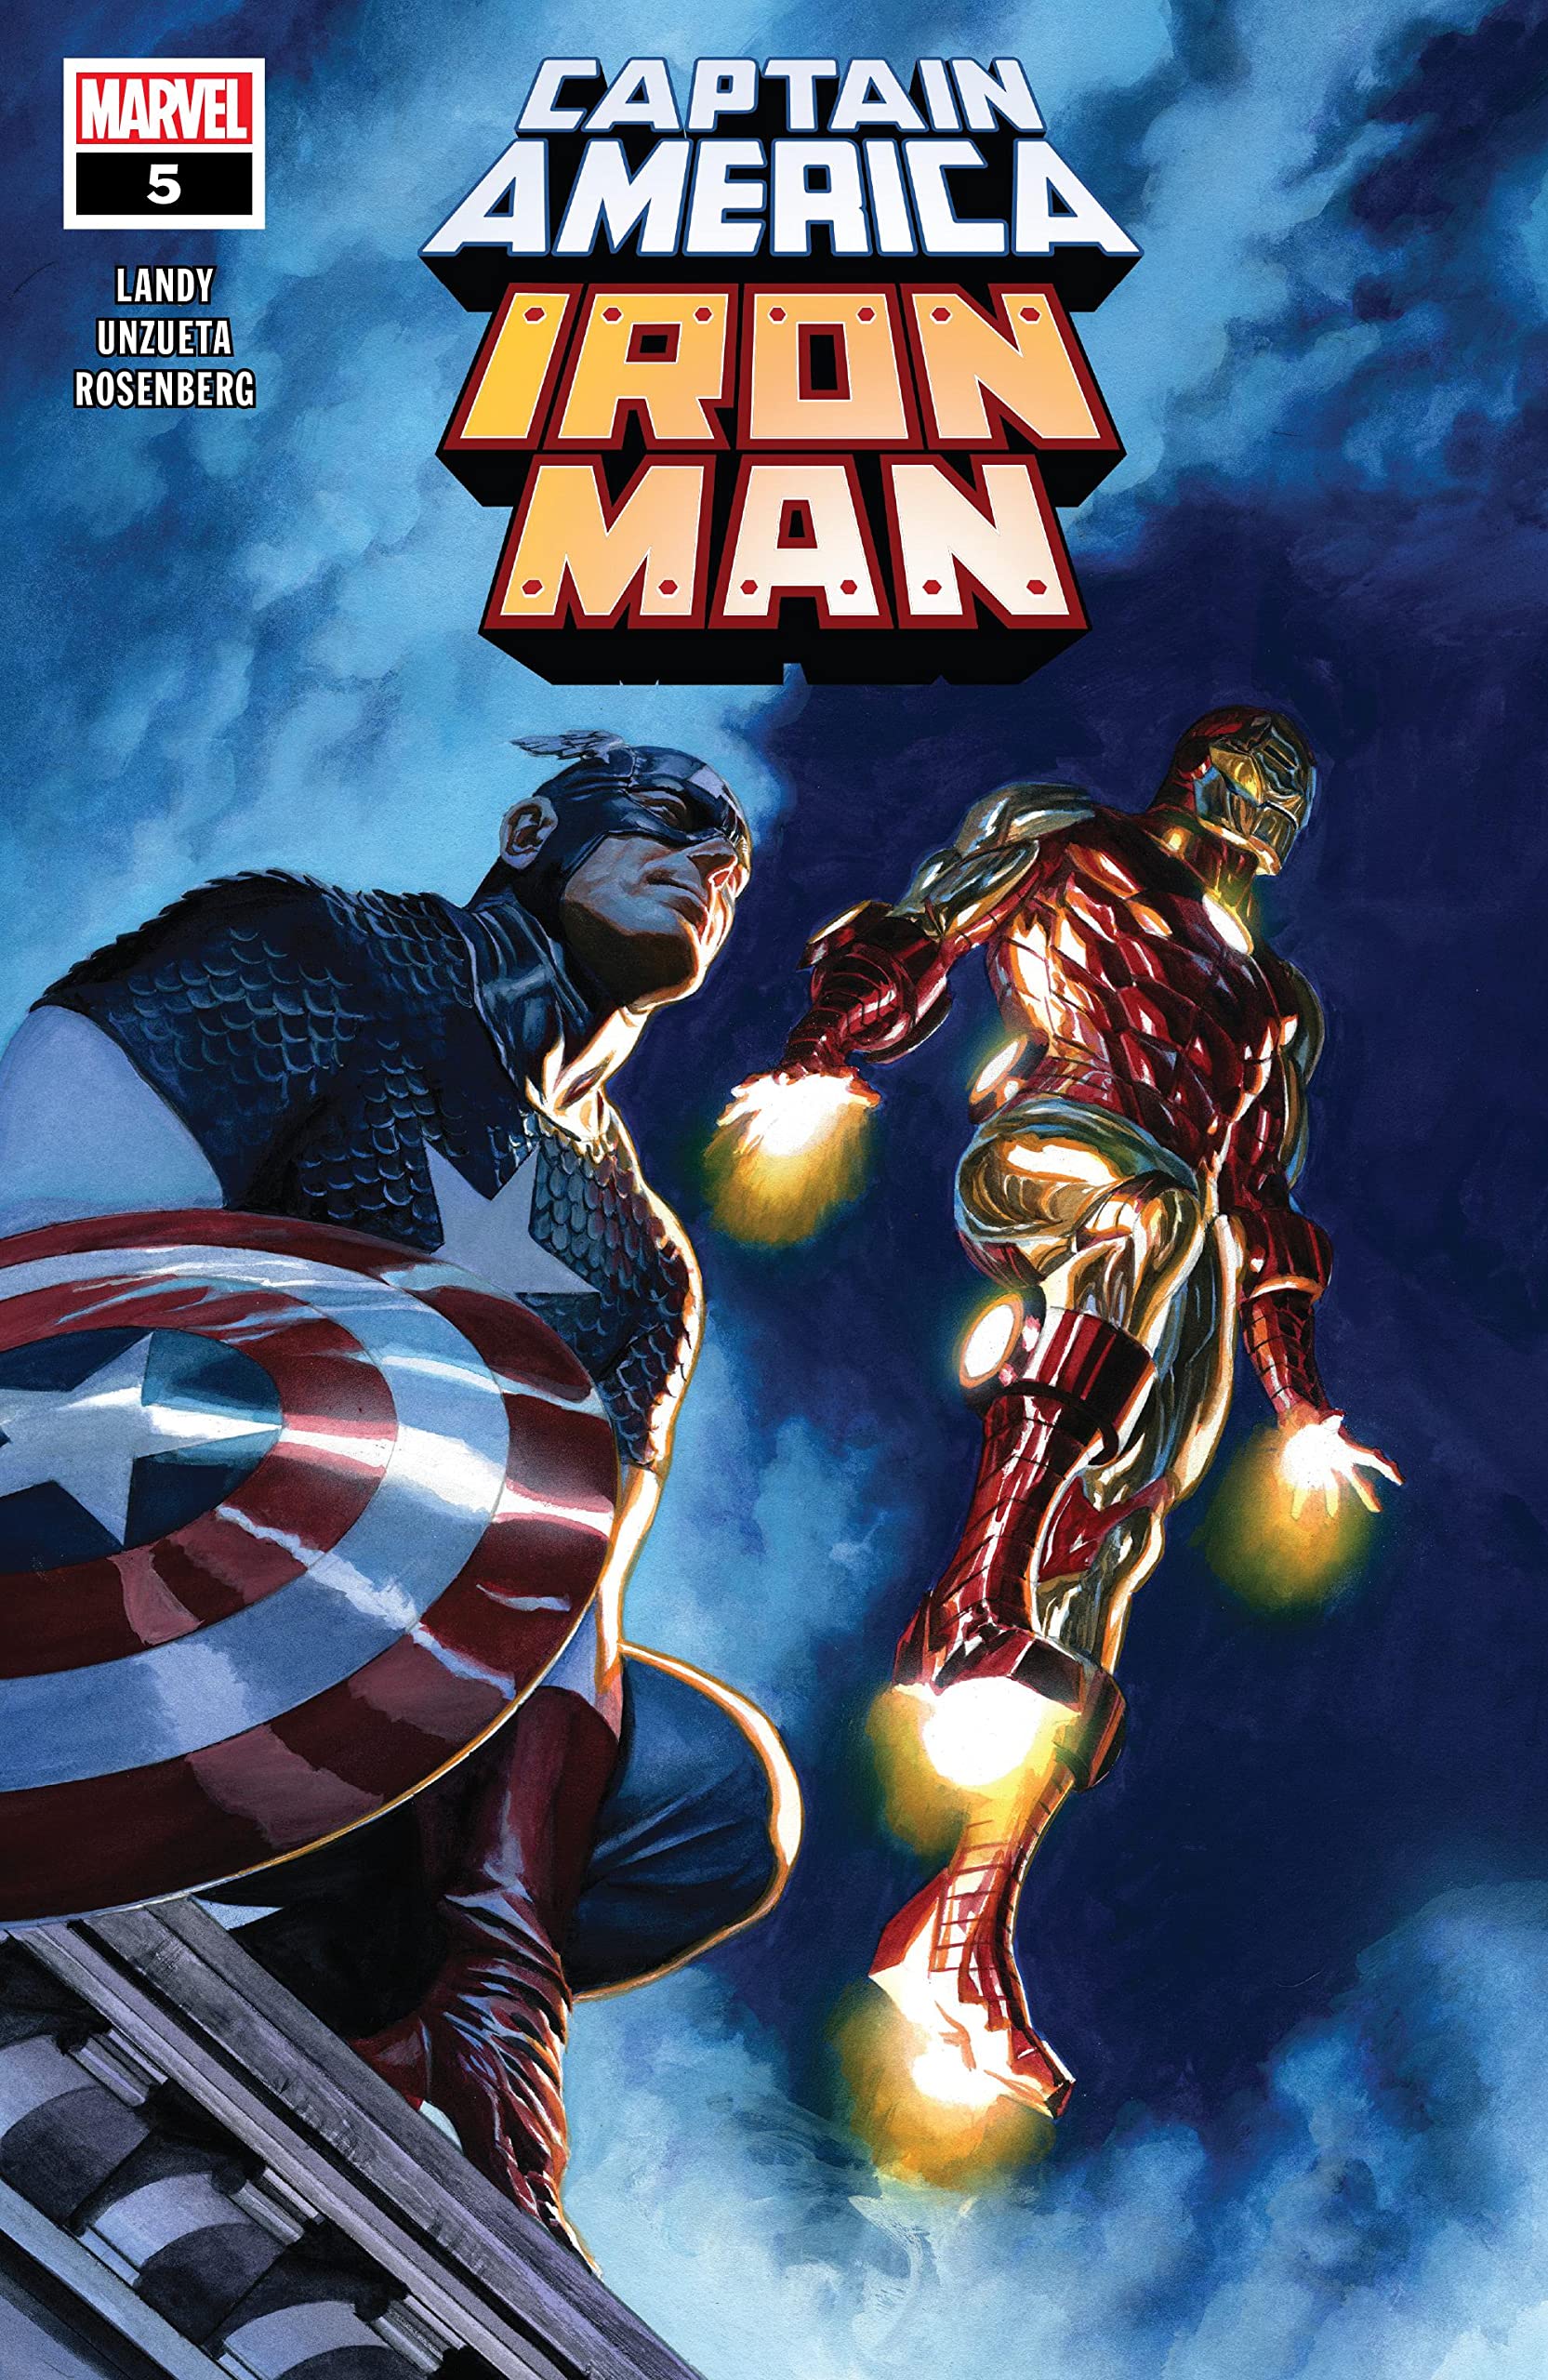 Gallina Por separado alma Captain America/Iron Man Vol 1 5 | Marvel Database | Fandom